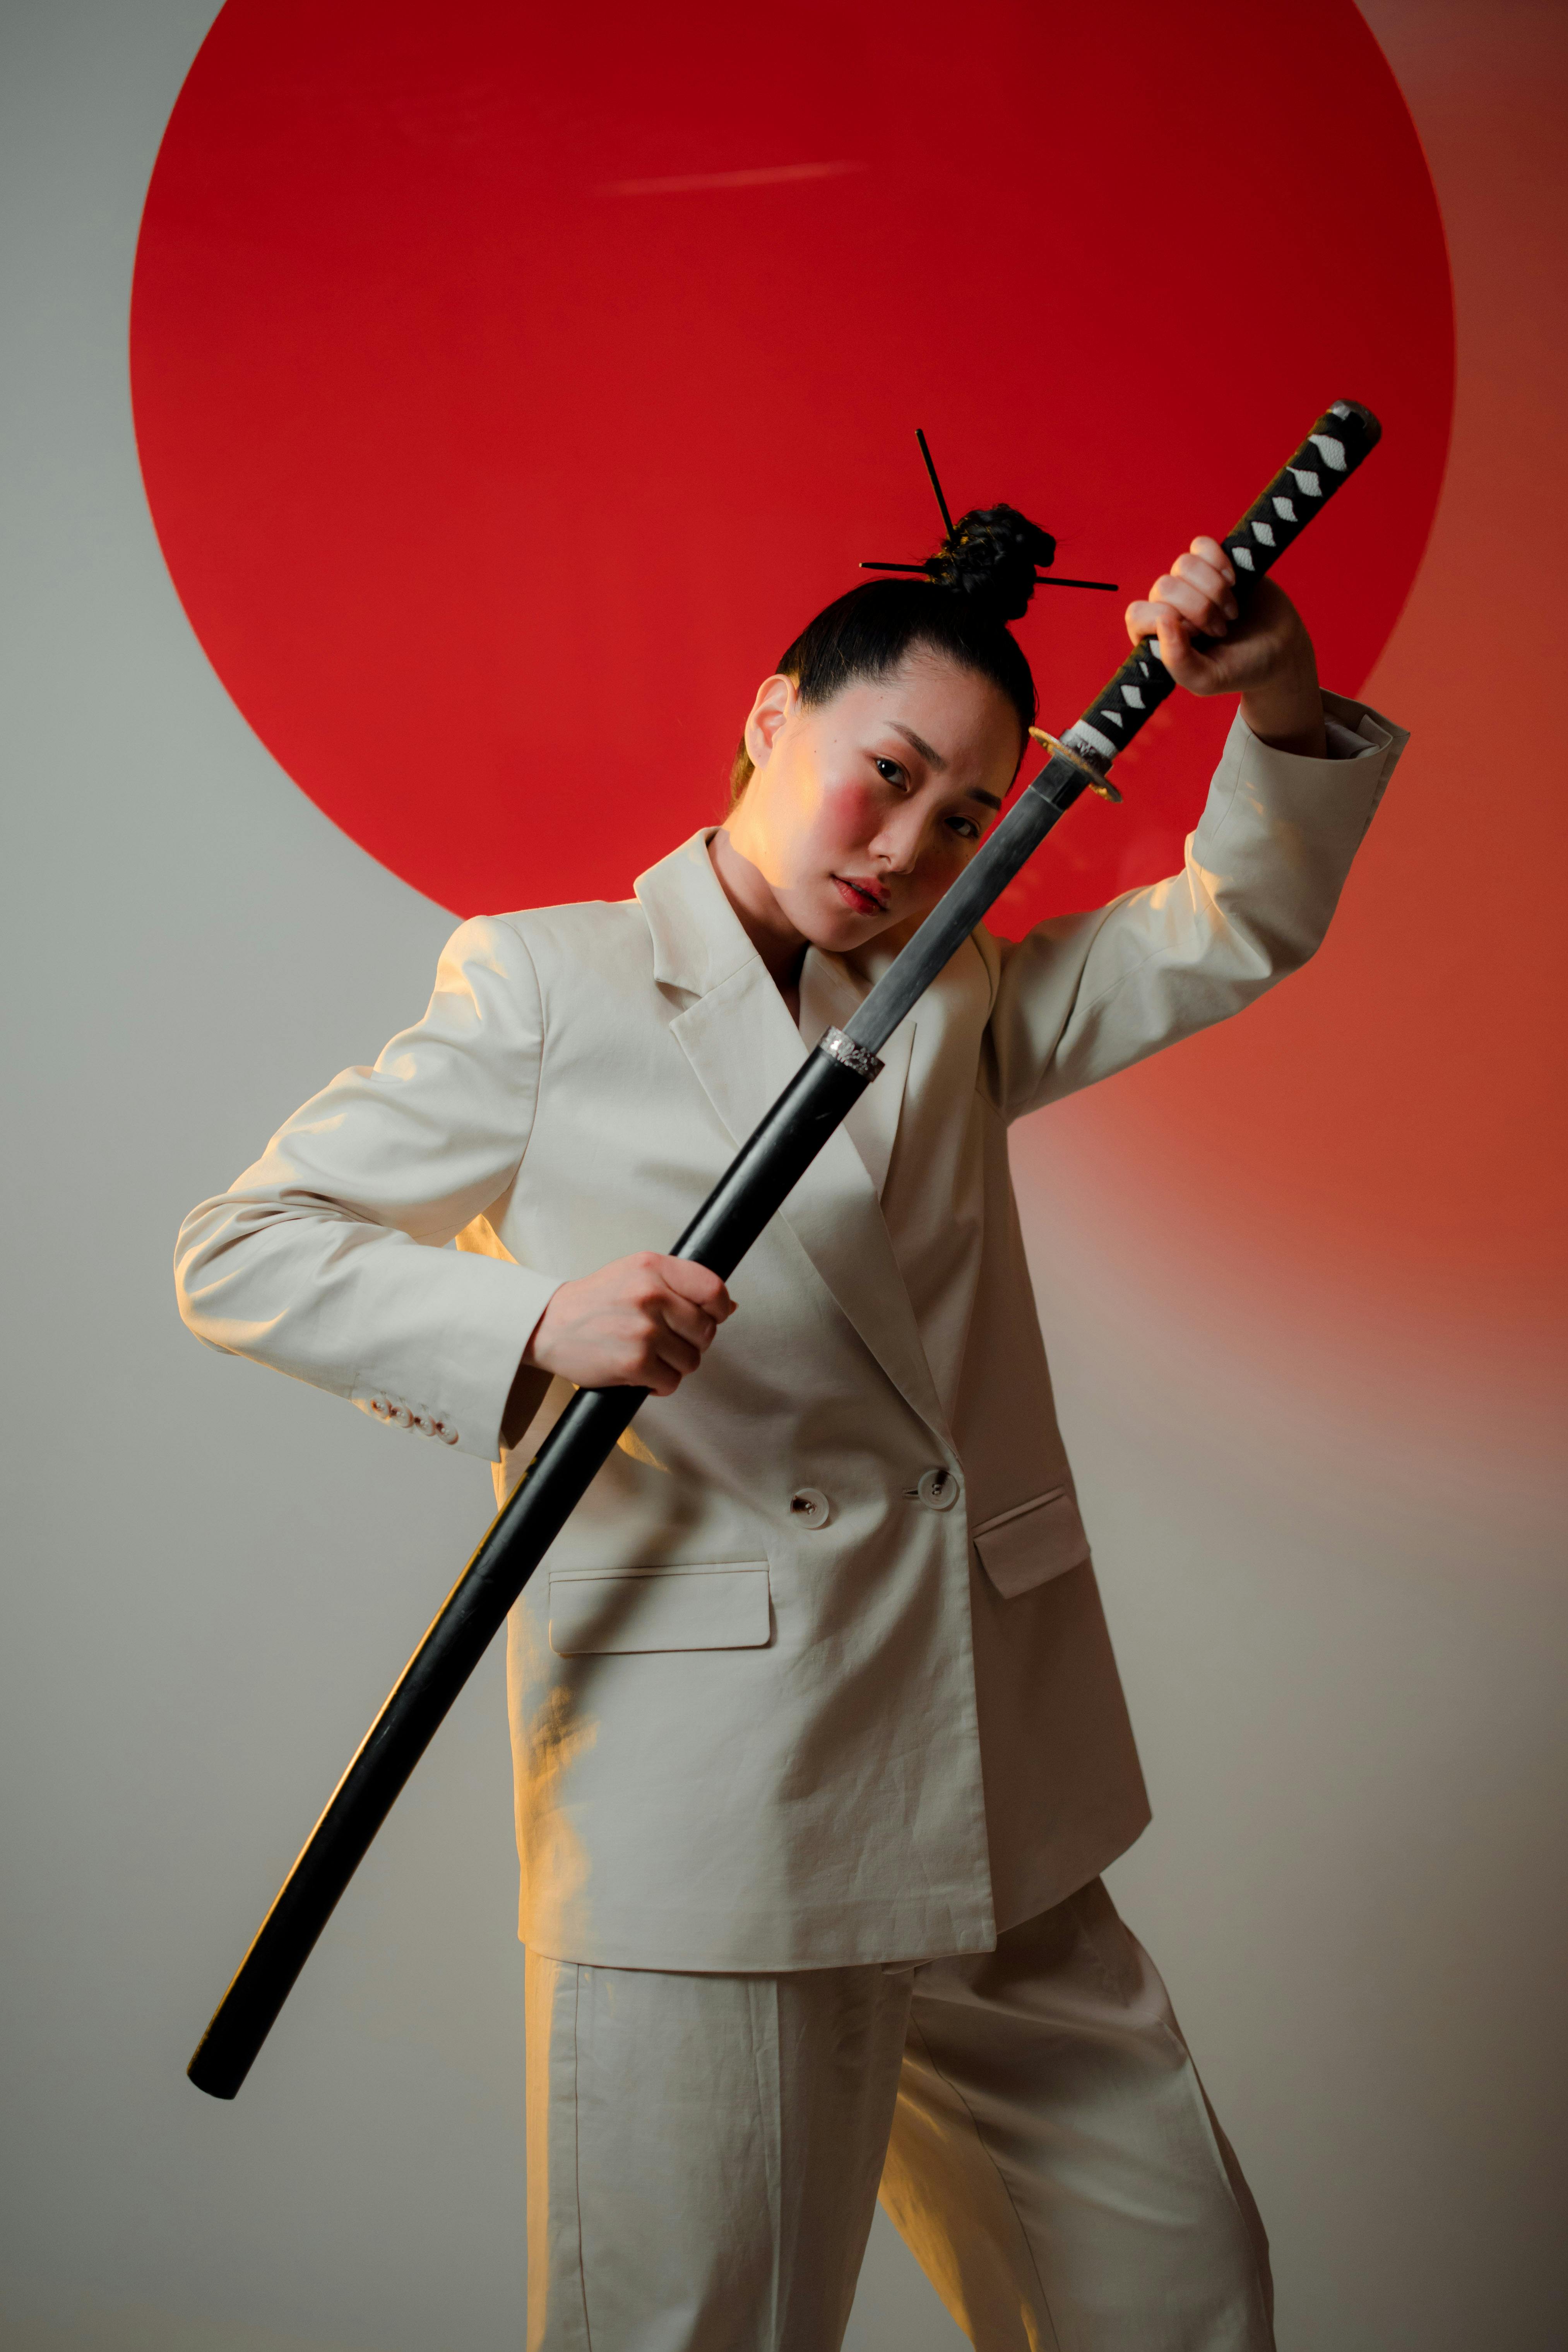 Dangerous woman samurai posing with samurai swords Stock Photo by fxquadro